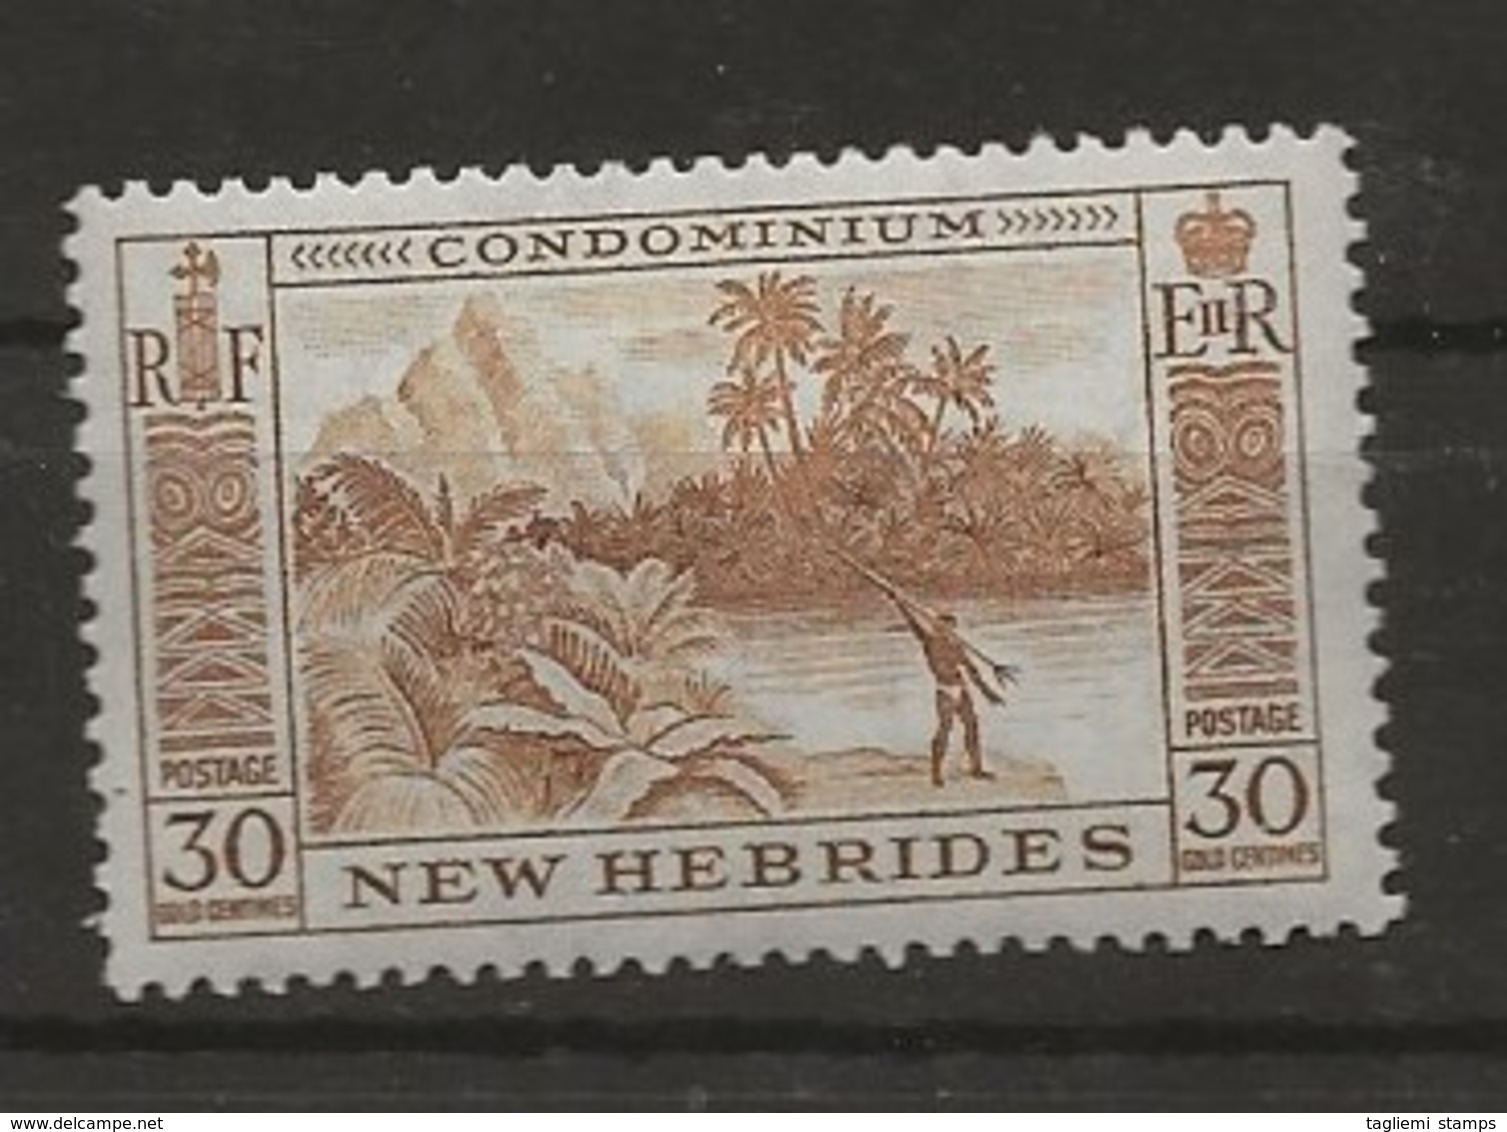 New Hebrides, 1957, SG  89, Mint Hinged - Unused Stamps